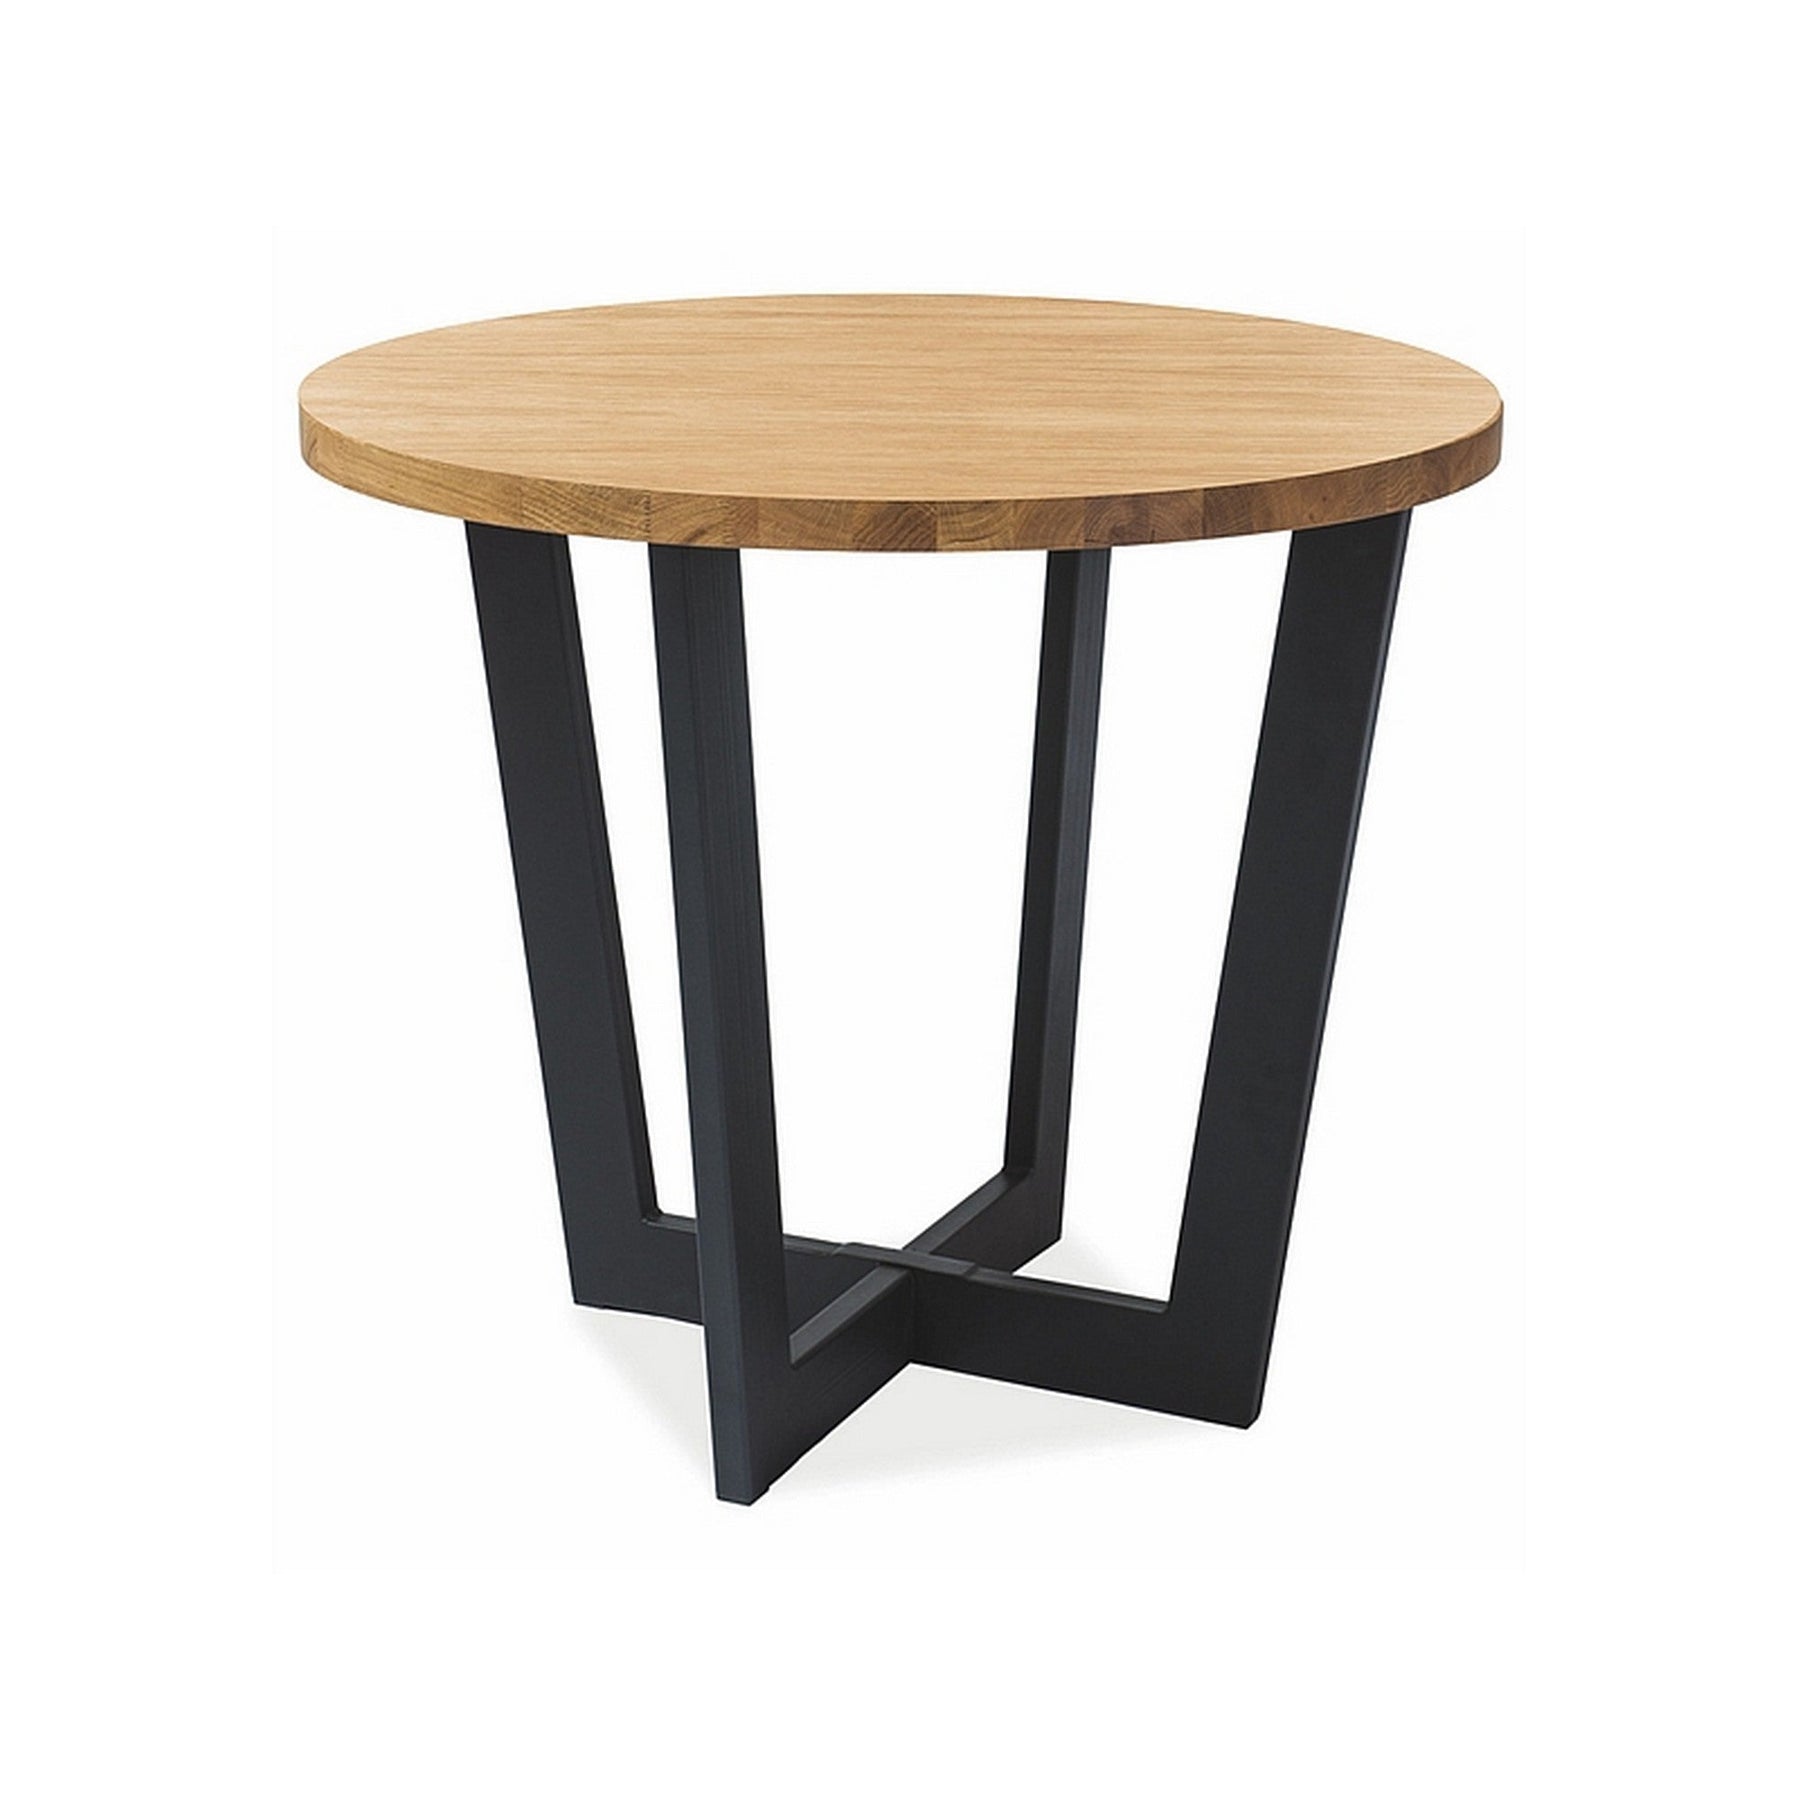 Masa cu aspect industrial Cono cu blat laminat, stejar/negru, 90x78 cm